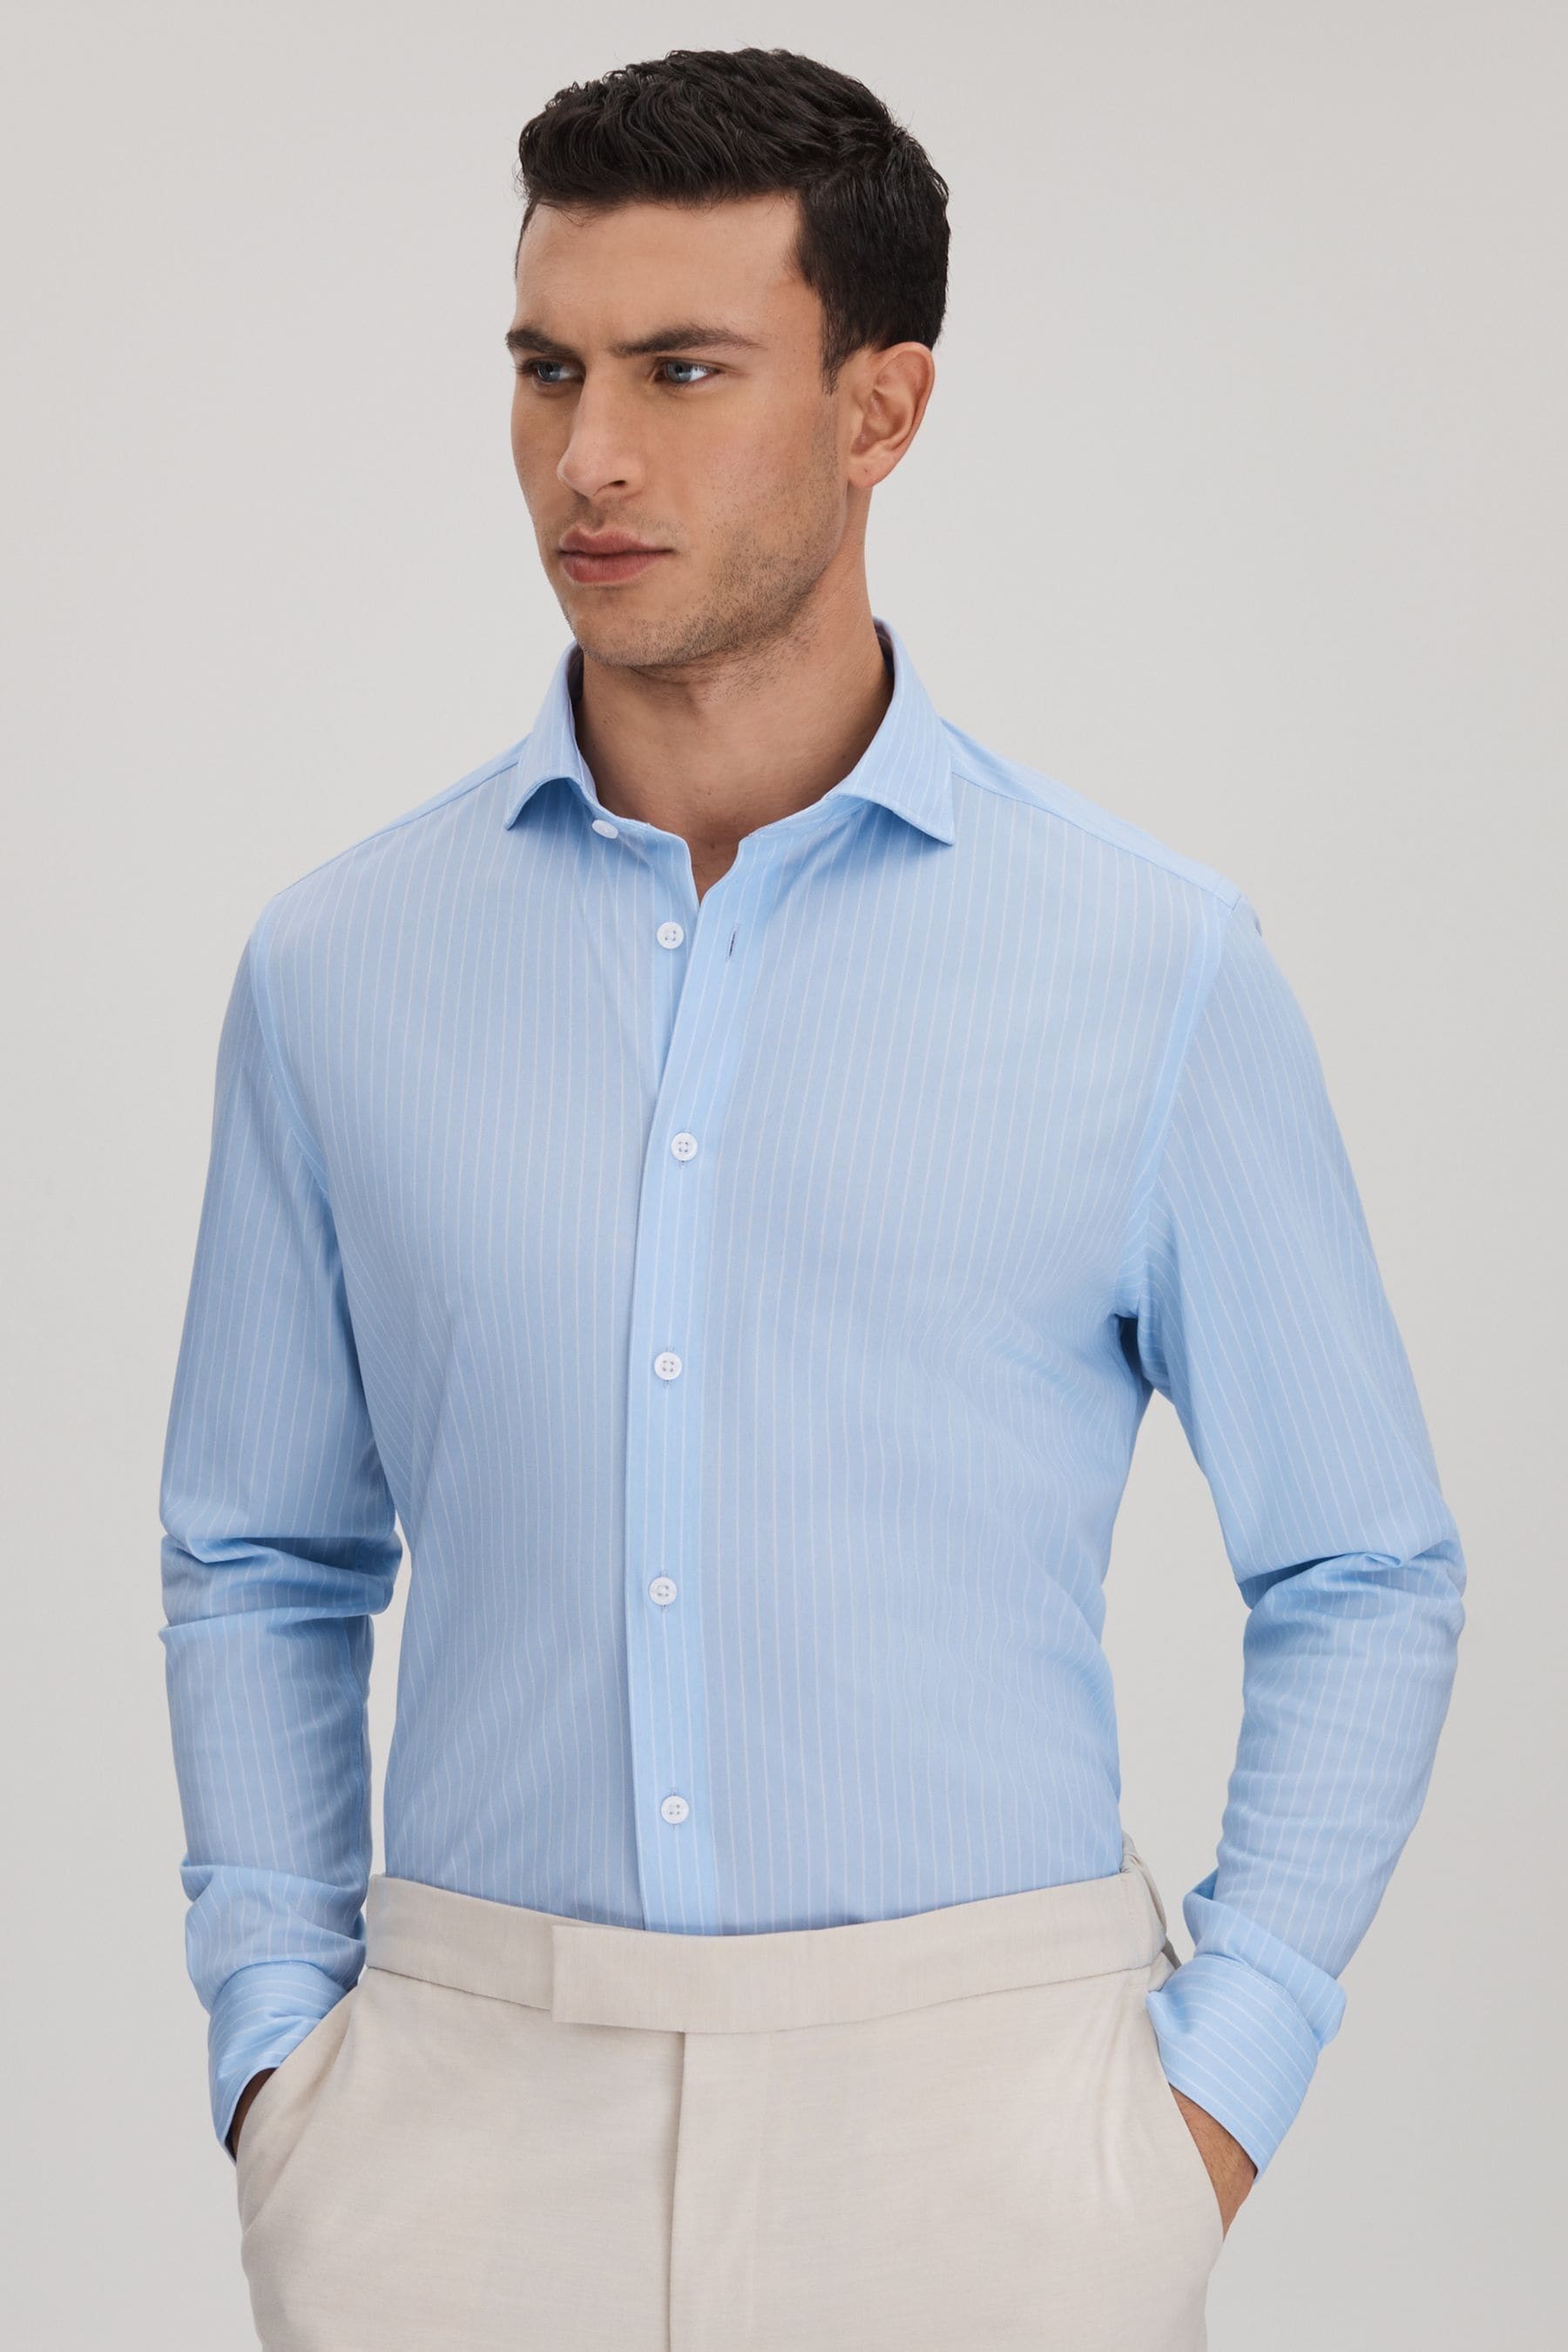 Reiss Fletcher - Soft Blue/white Striped Cotton Blend Shirt, Xl